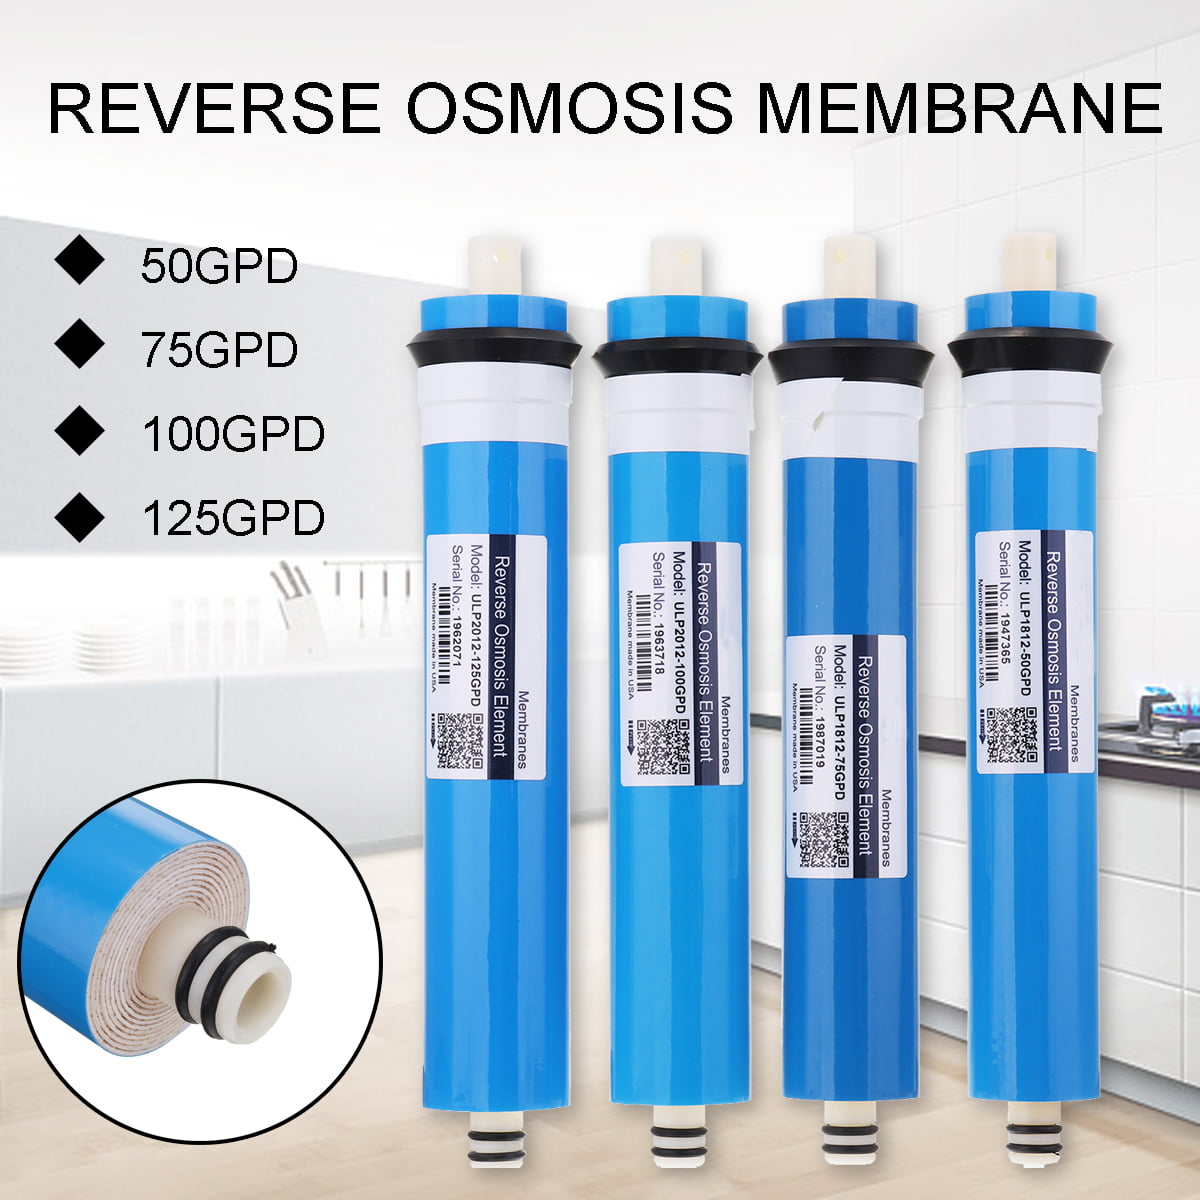 125GPD RO Membrane Reverse Osmosis Water Filter Purifier Cartridge TFC-2012 New 